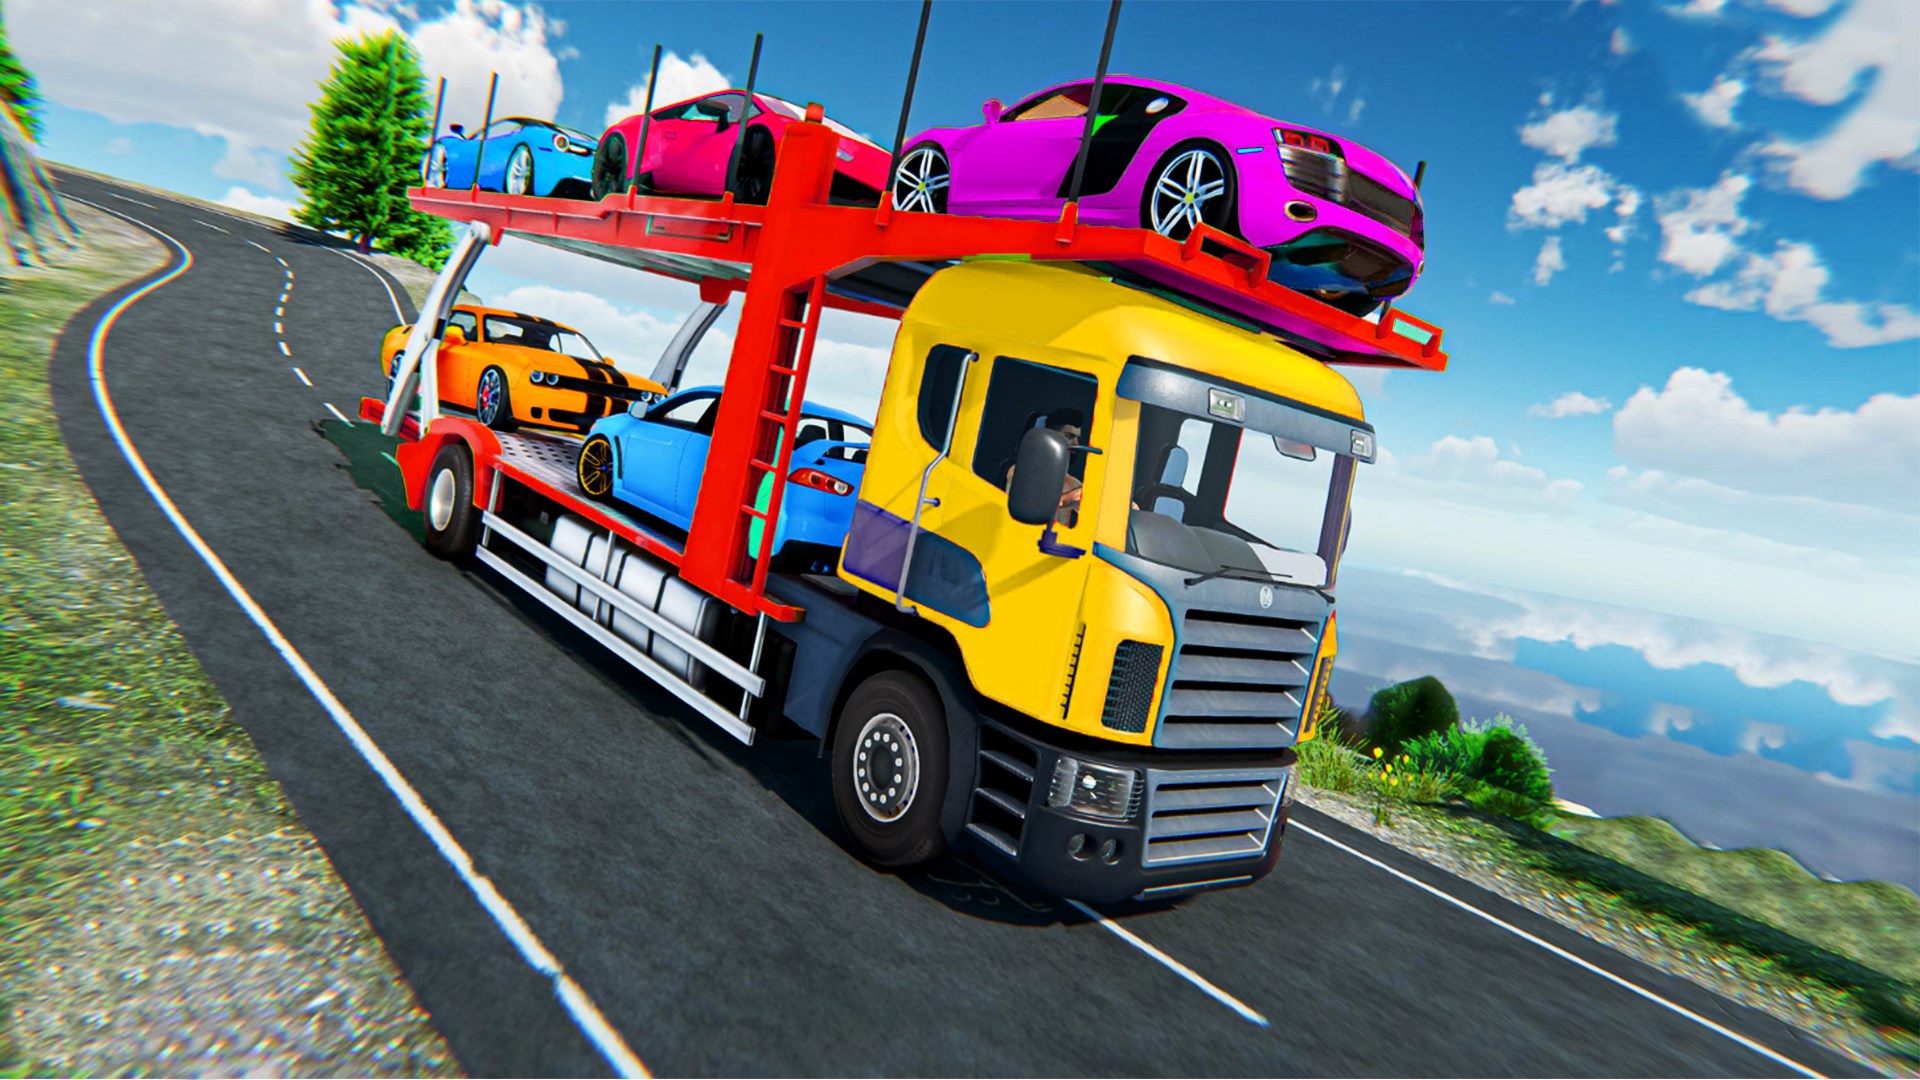 Comprar On The Road The Truck Simulator - Microsoft Store pt-MZ